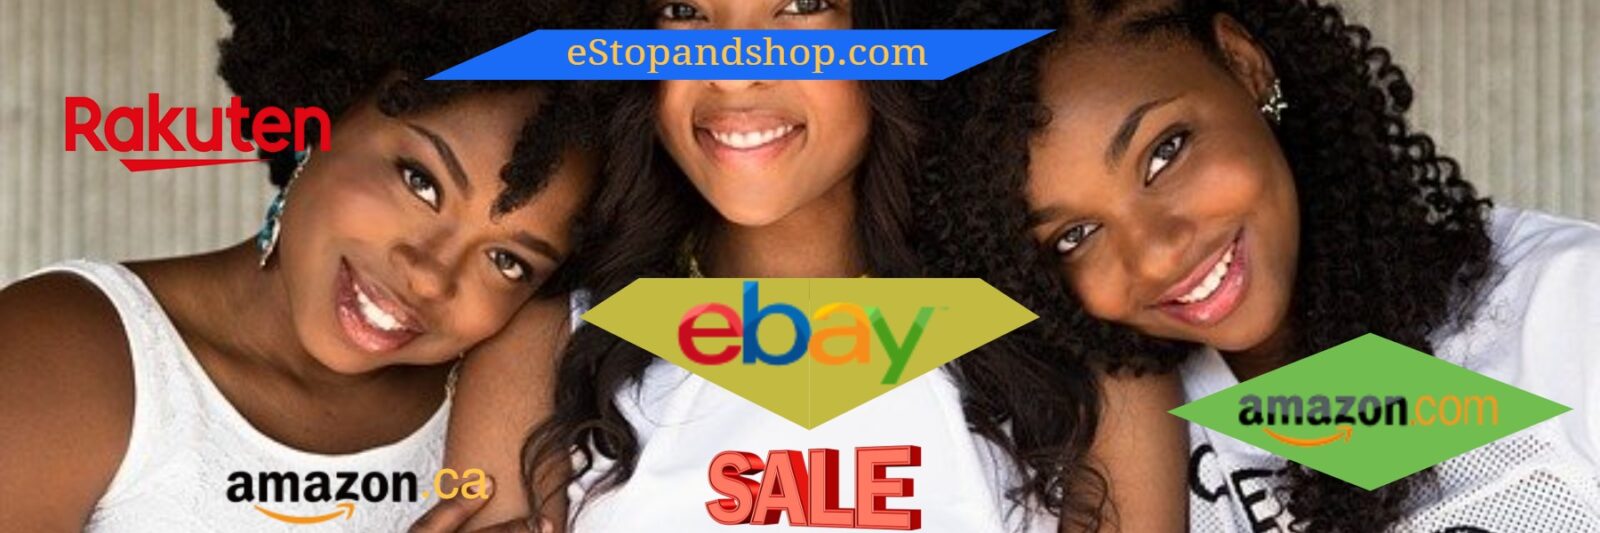 estopandshop.com for best amazon deals today and best deals today product list